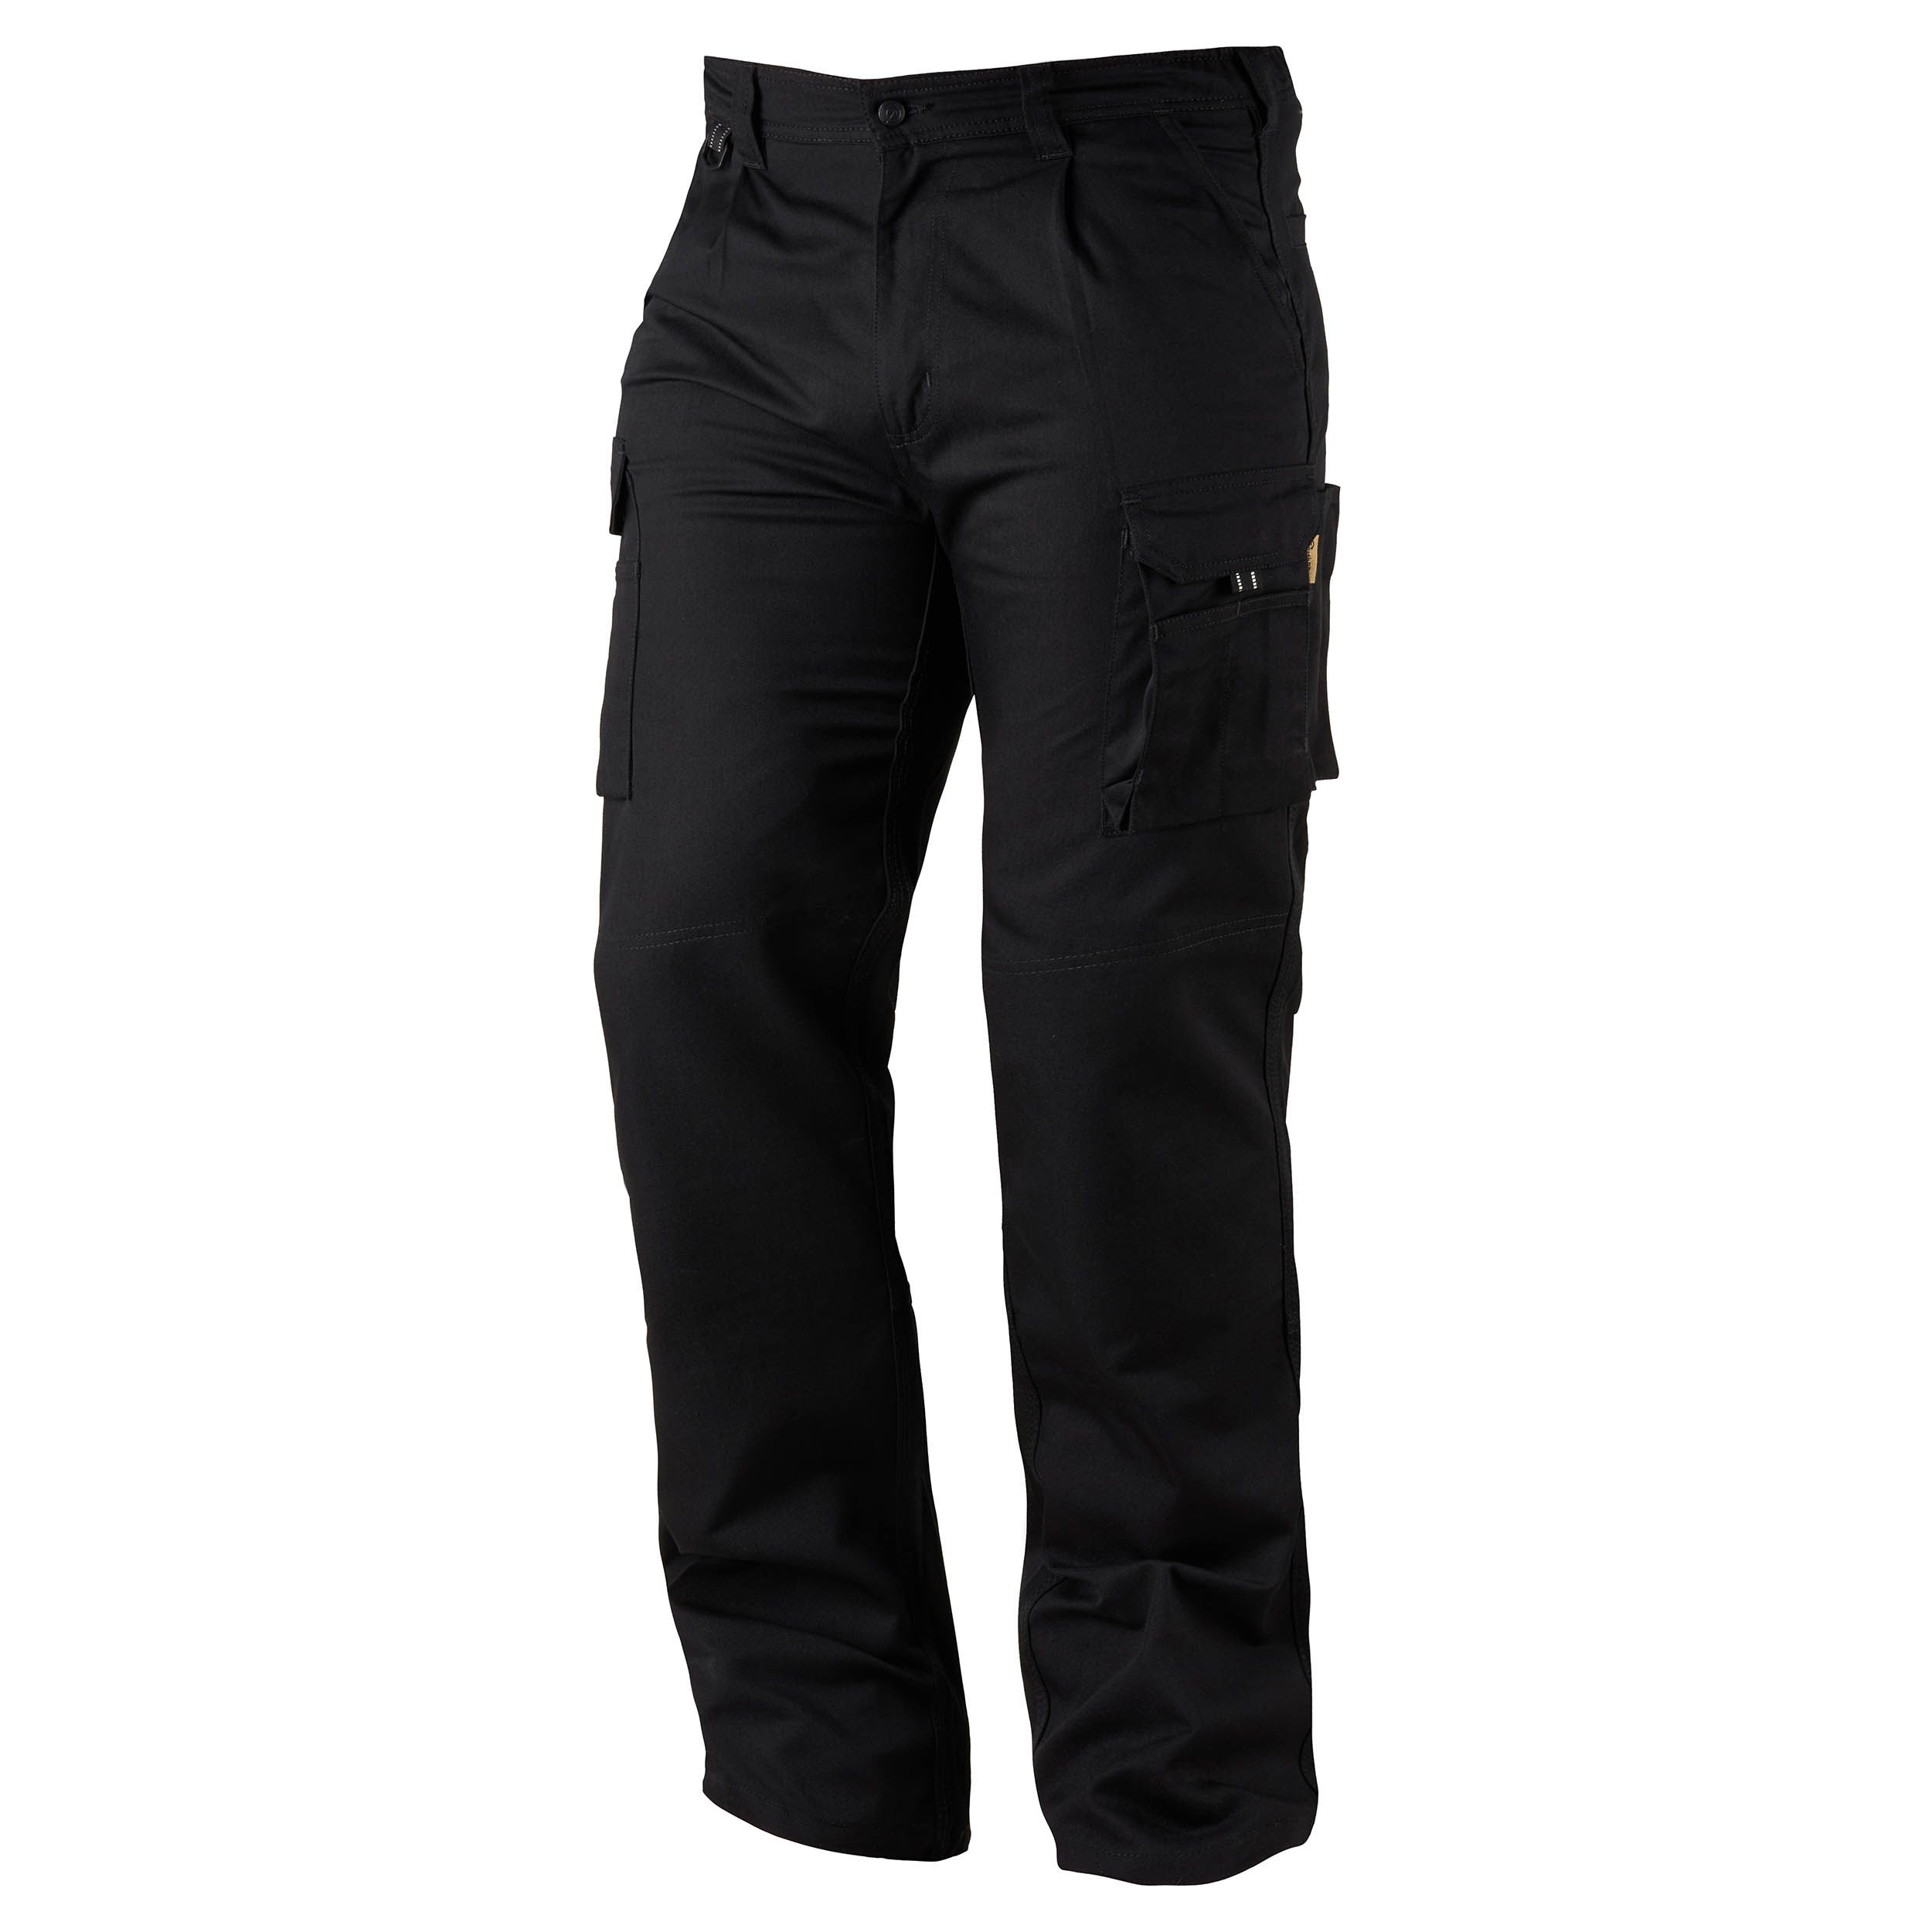 Orn Hawk EarthPro Combat Trouser Black Men's Cotton, Recycled Polyester Hard Wear Trousers 46in, 117 → 127cm